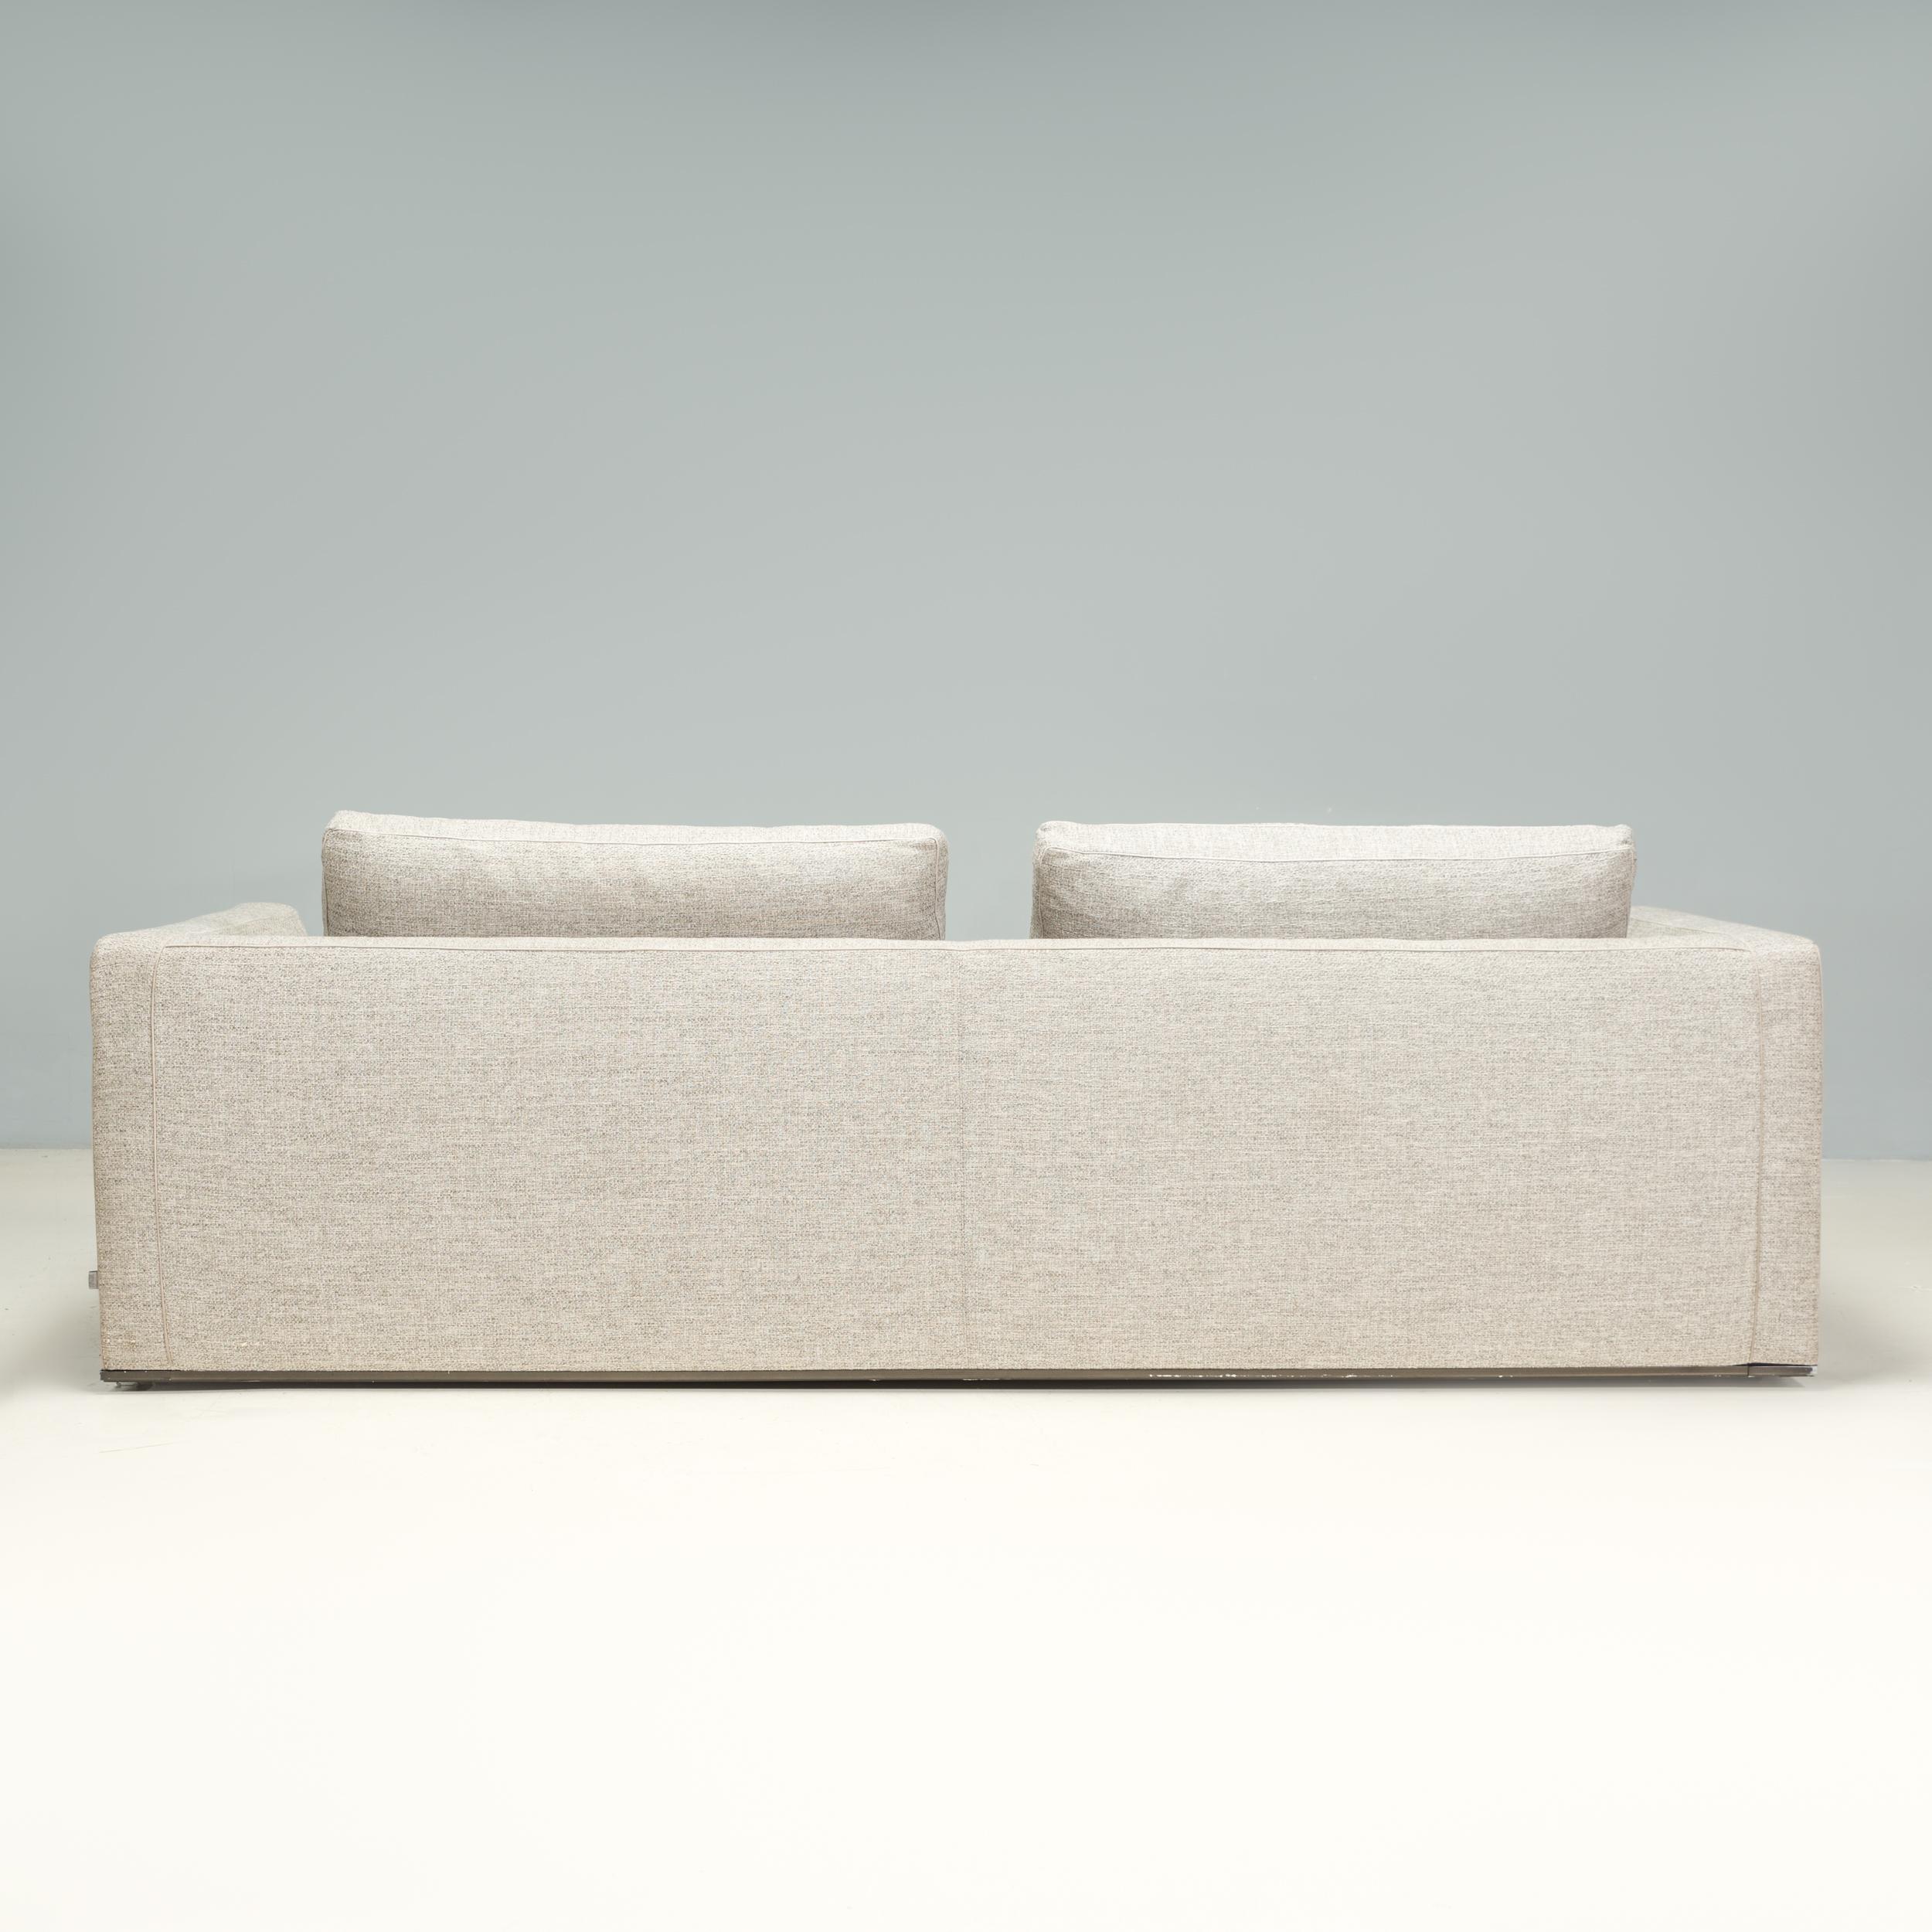 Antonio Citterio for B&B Italia Richard Fabric Two Seat Sofa In Good Condition For Sale In London, GB